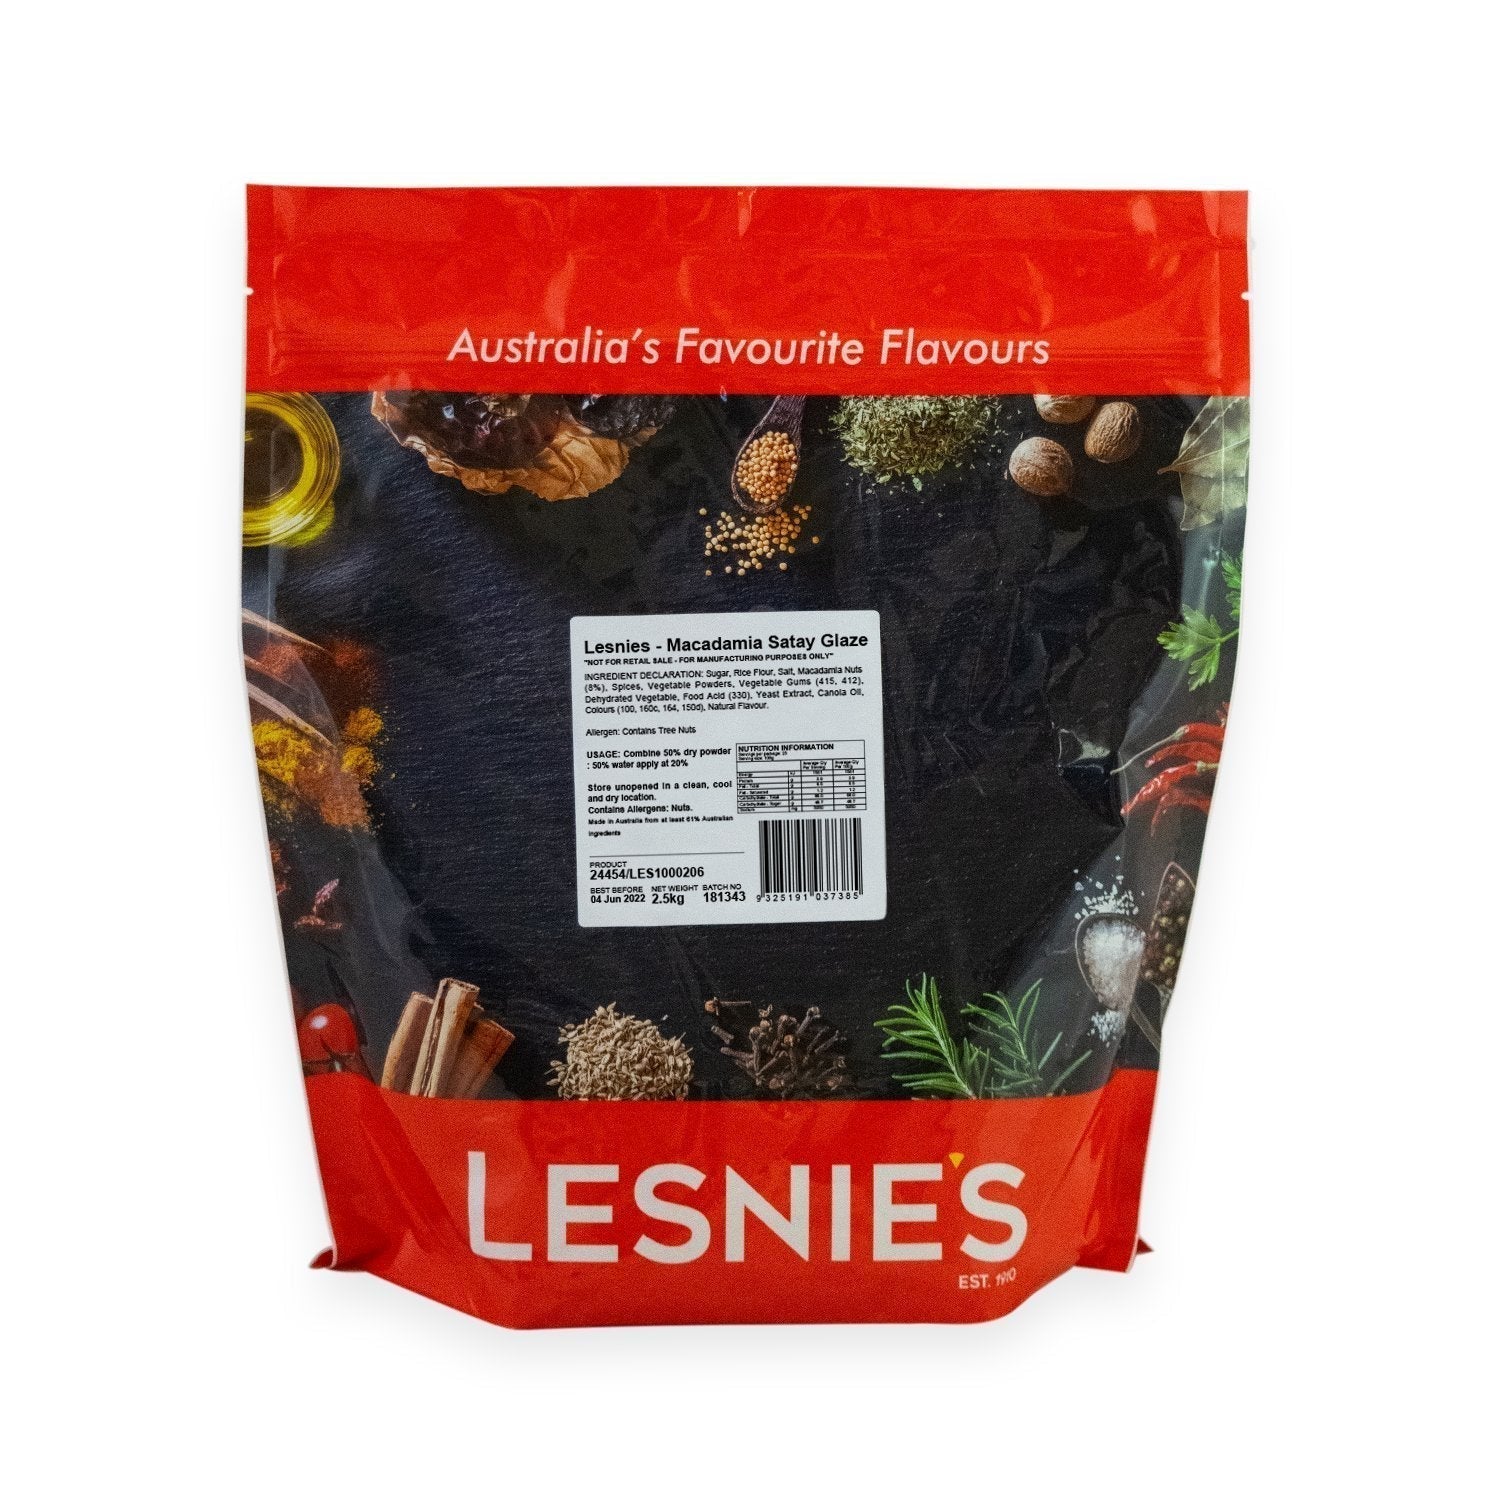 Lesnies Lesnies Macadamia Satay Glaze 2.5kg Food Ingredients Bag of 1 